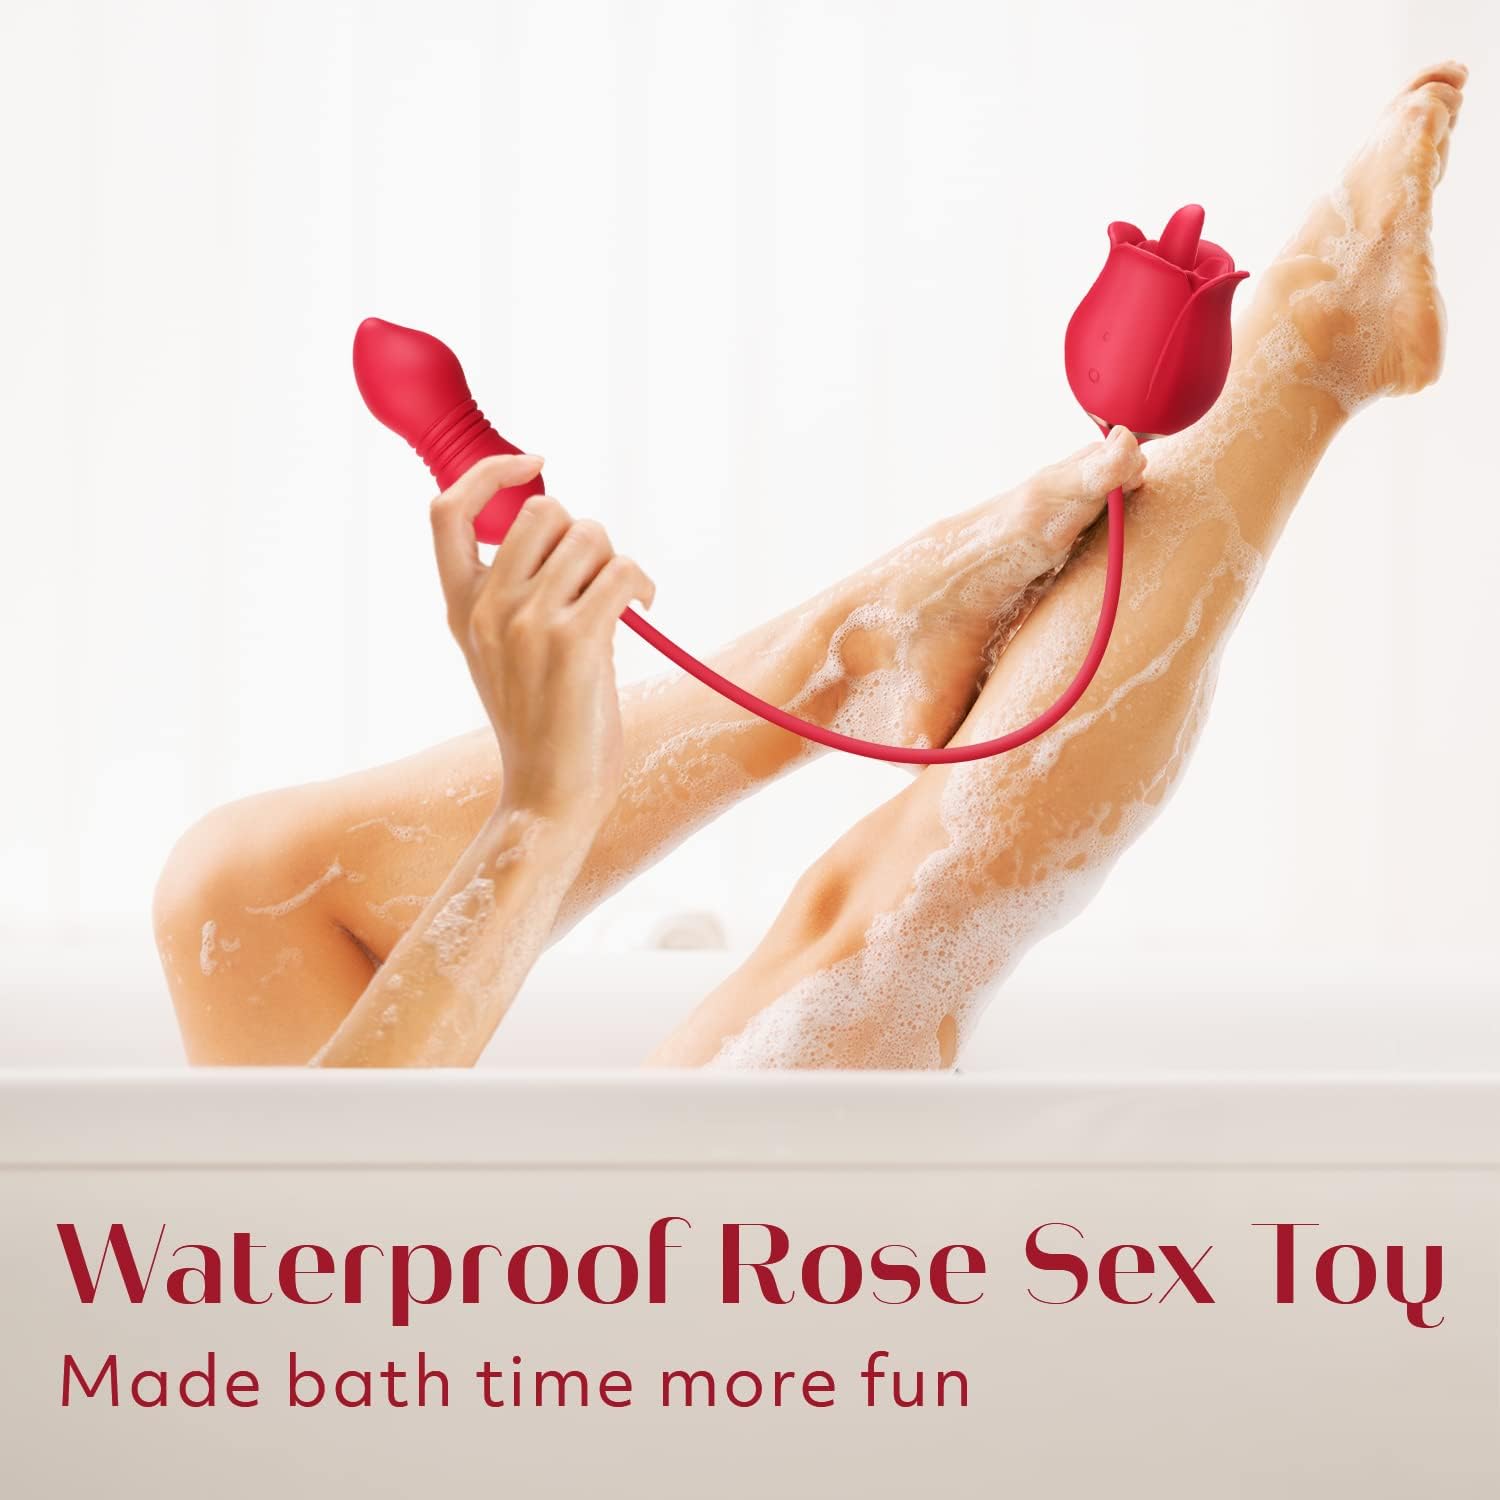 Rose Sex Toy Dildo Vibrator - Sex Shop Miami